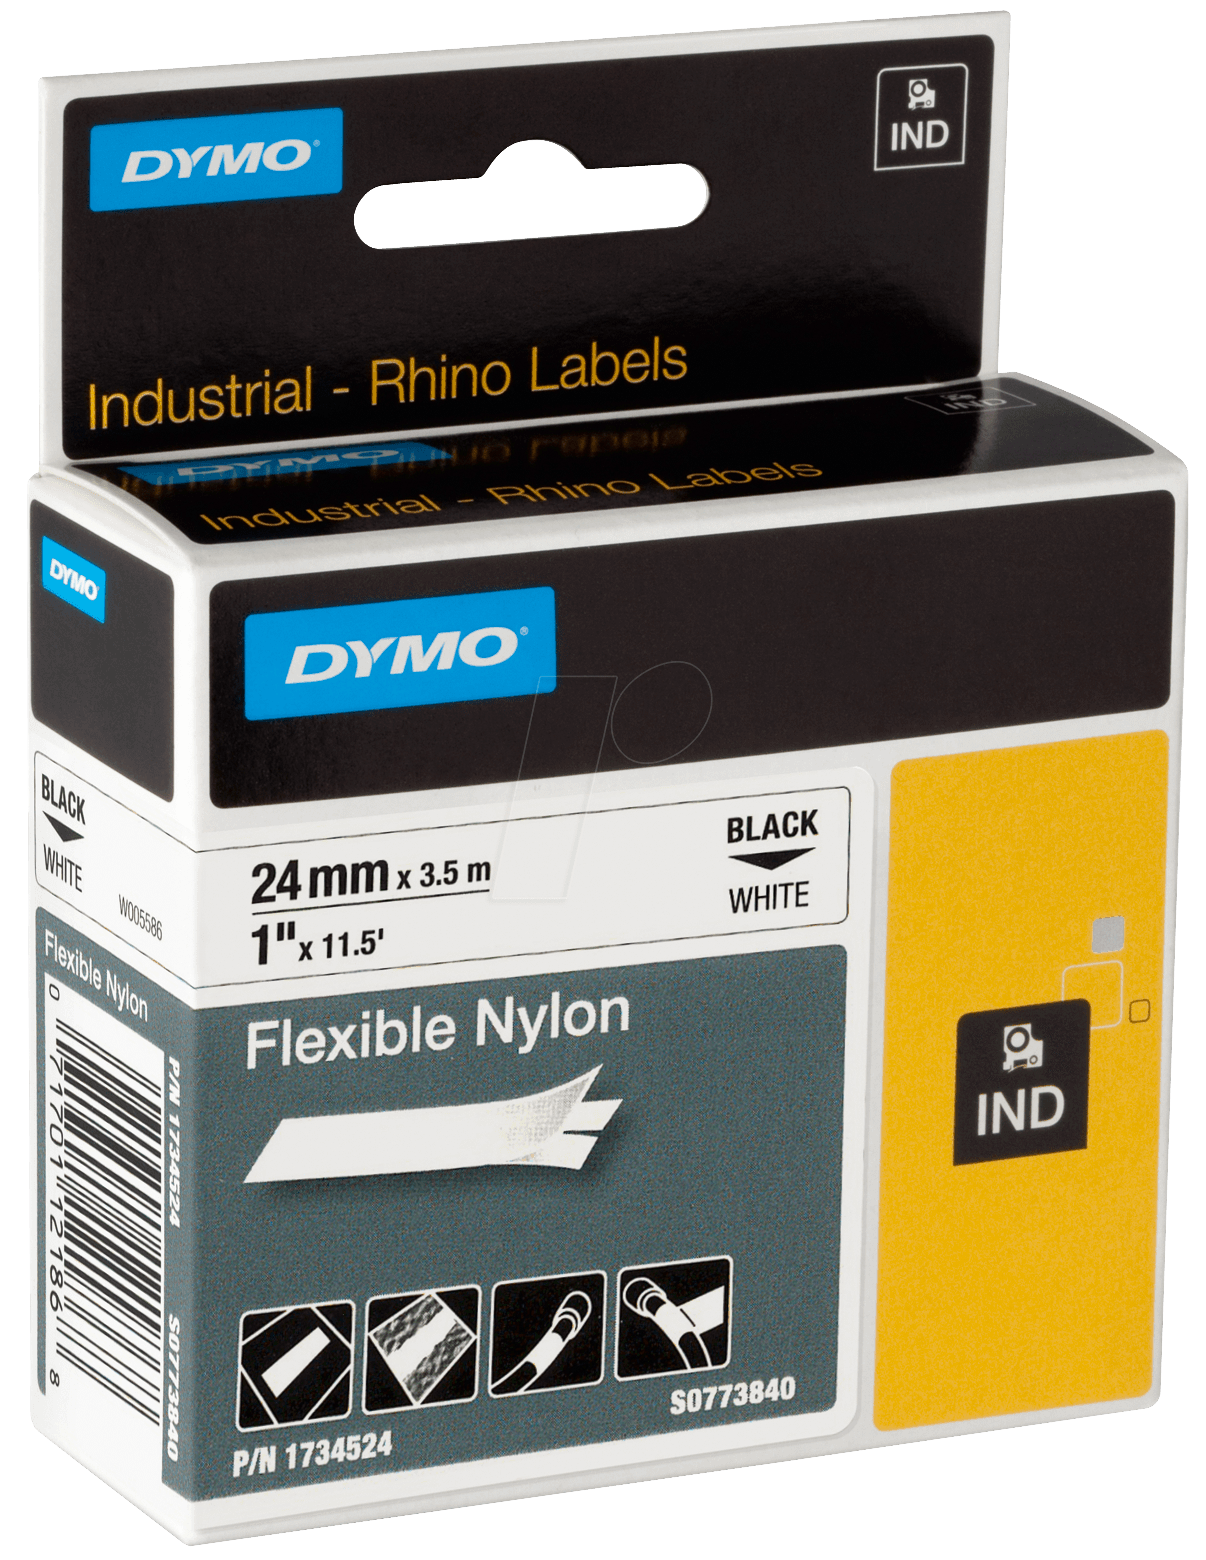 DYMO IND 1734524 - DYMO IND Nylon, 24mm, schwarz/weiß von Dymo